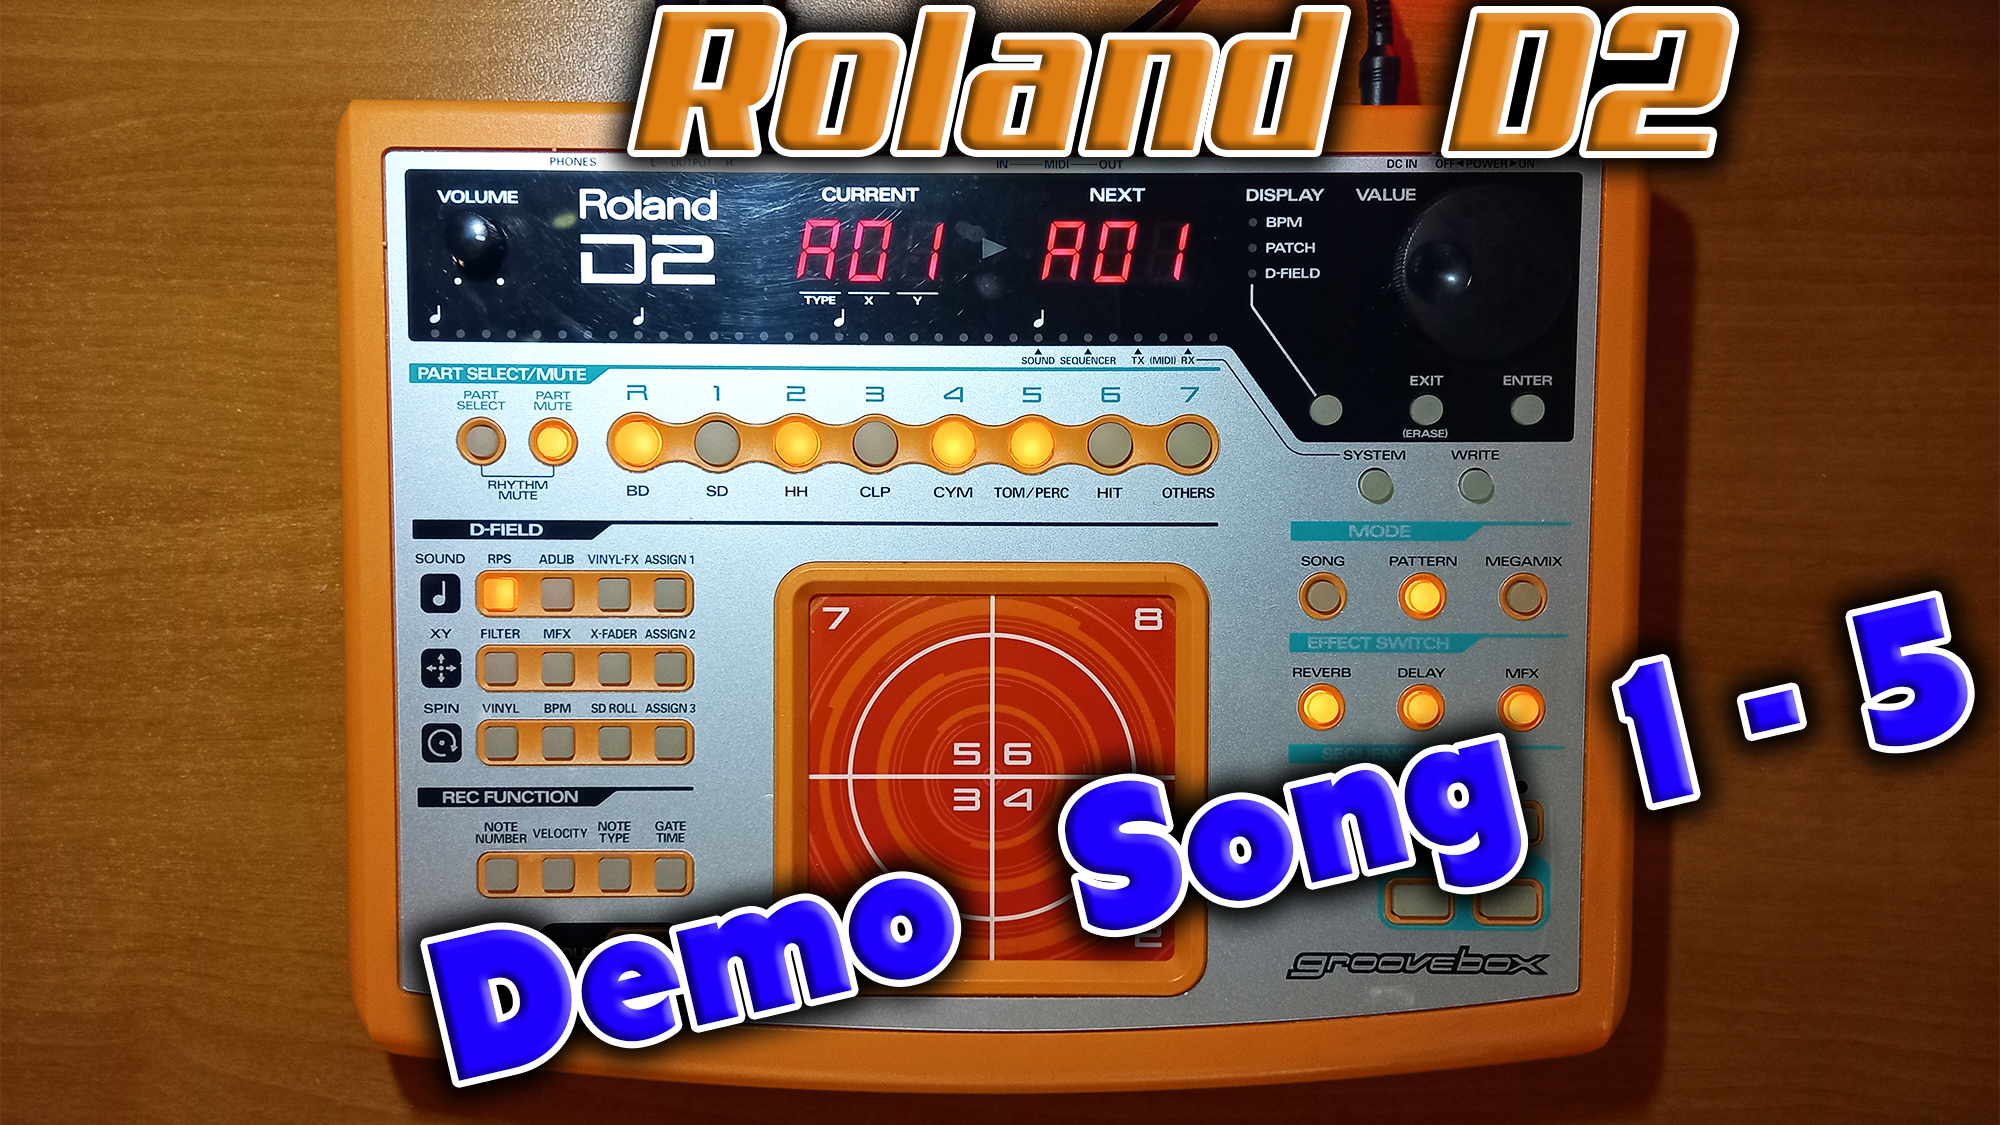 Грувбокс из далёкого 2001 года - Roland D2 !  Слушаем Demo songs  1-2-3-4-5